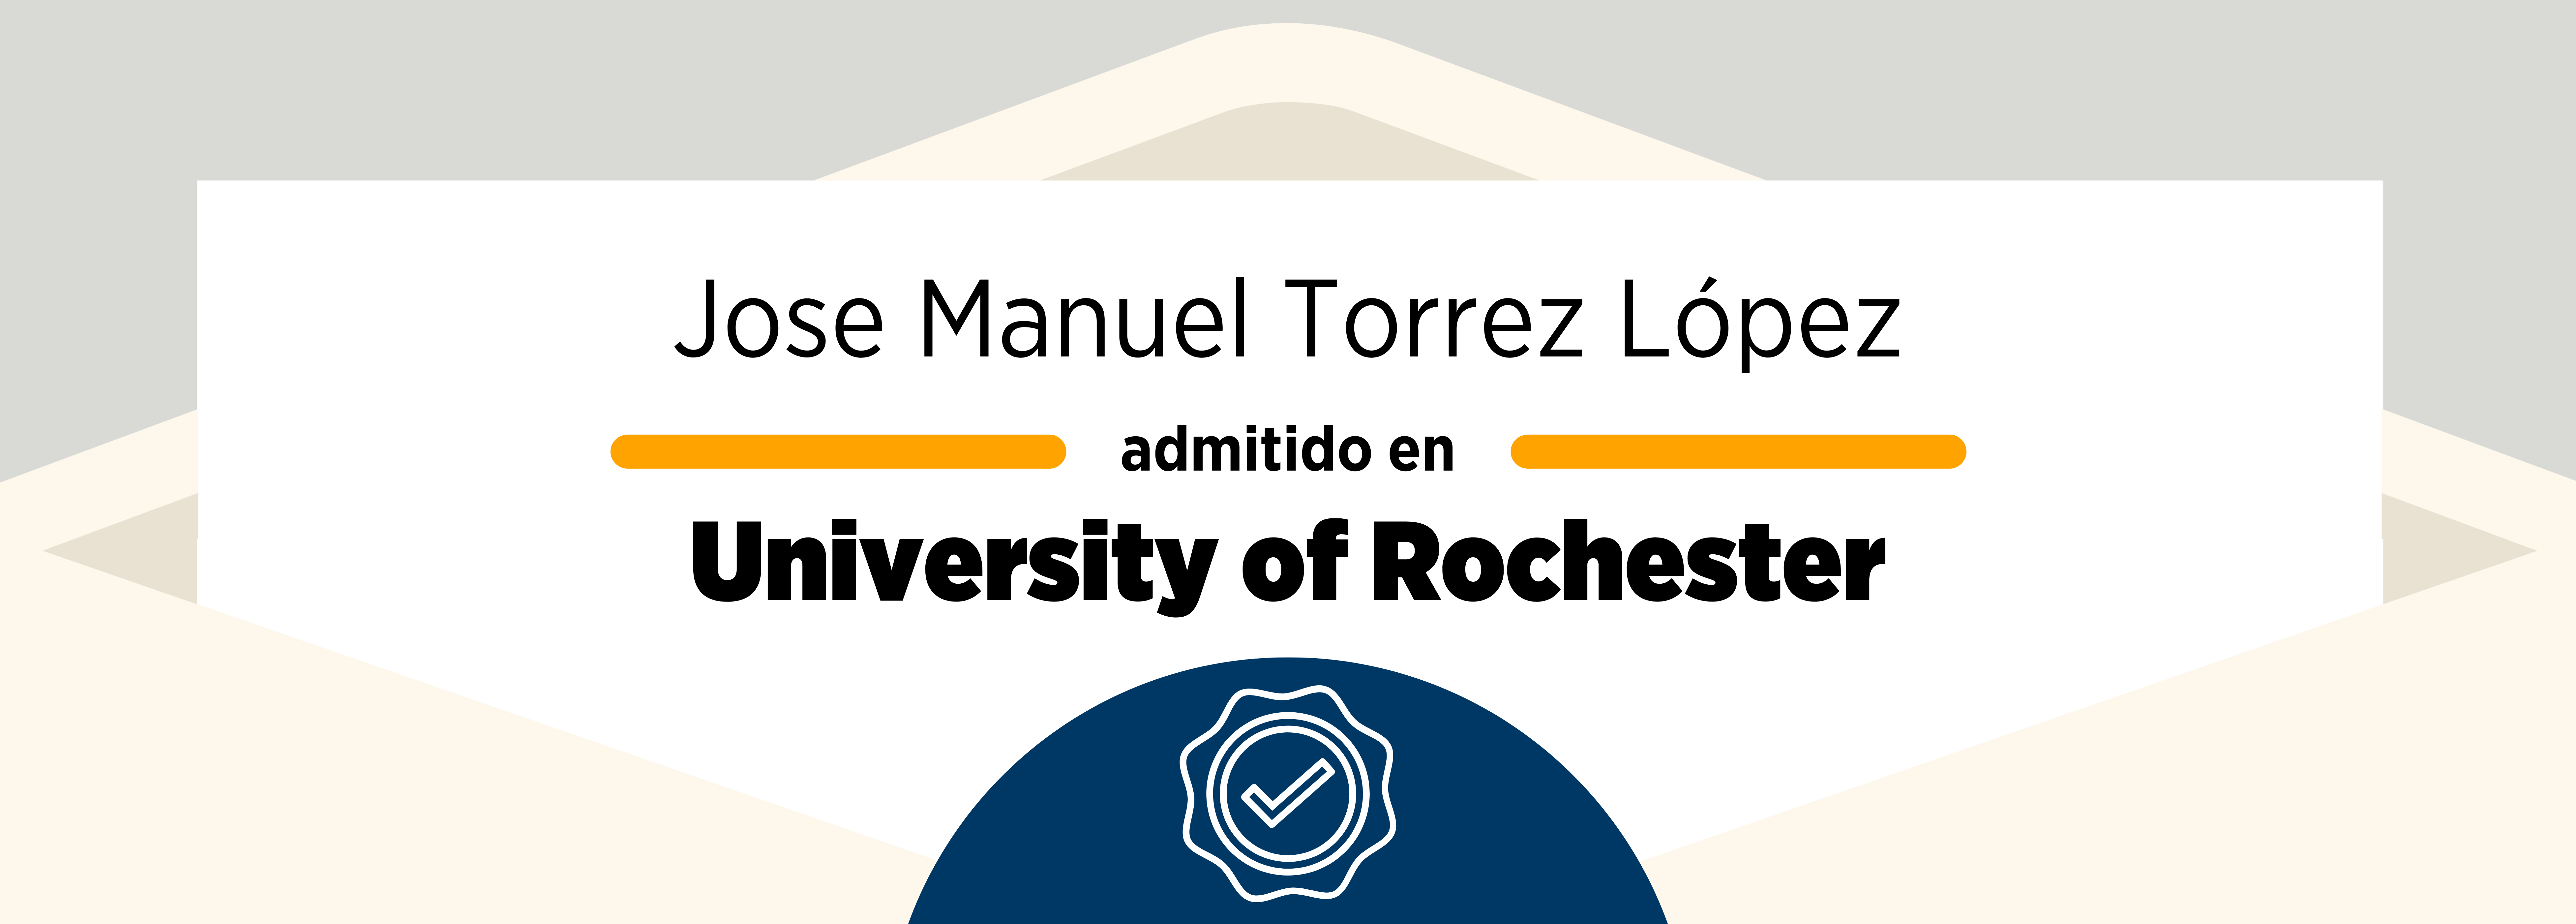 Admissions 2019: Jose Manuel Torrez López & University of Rochester